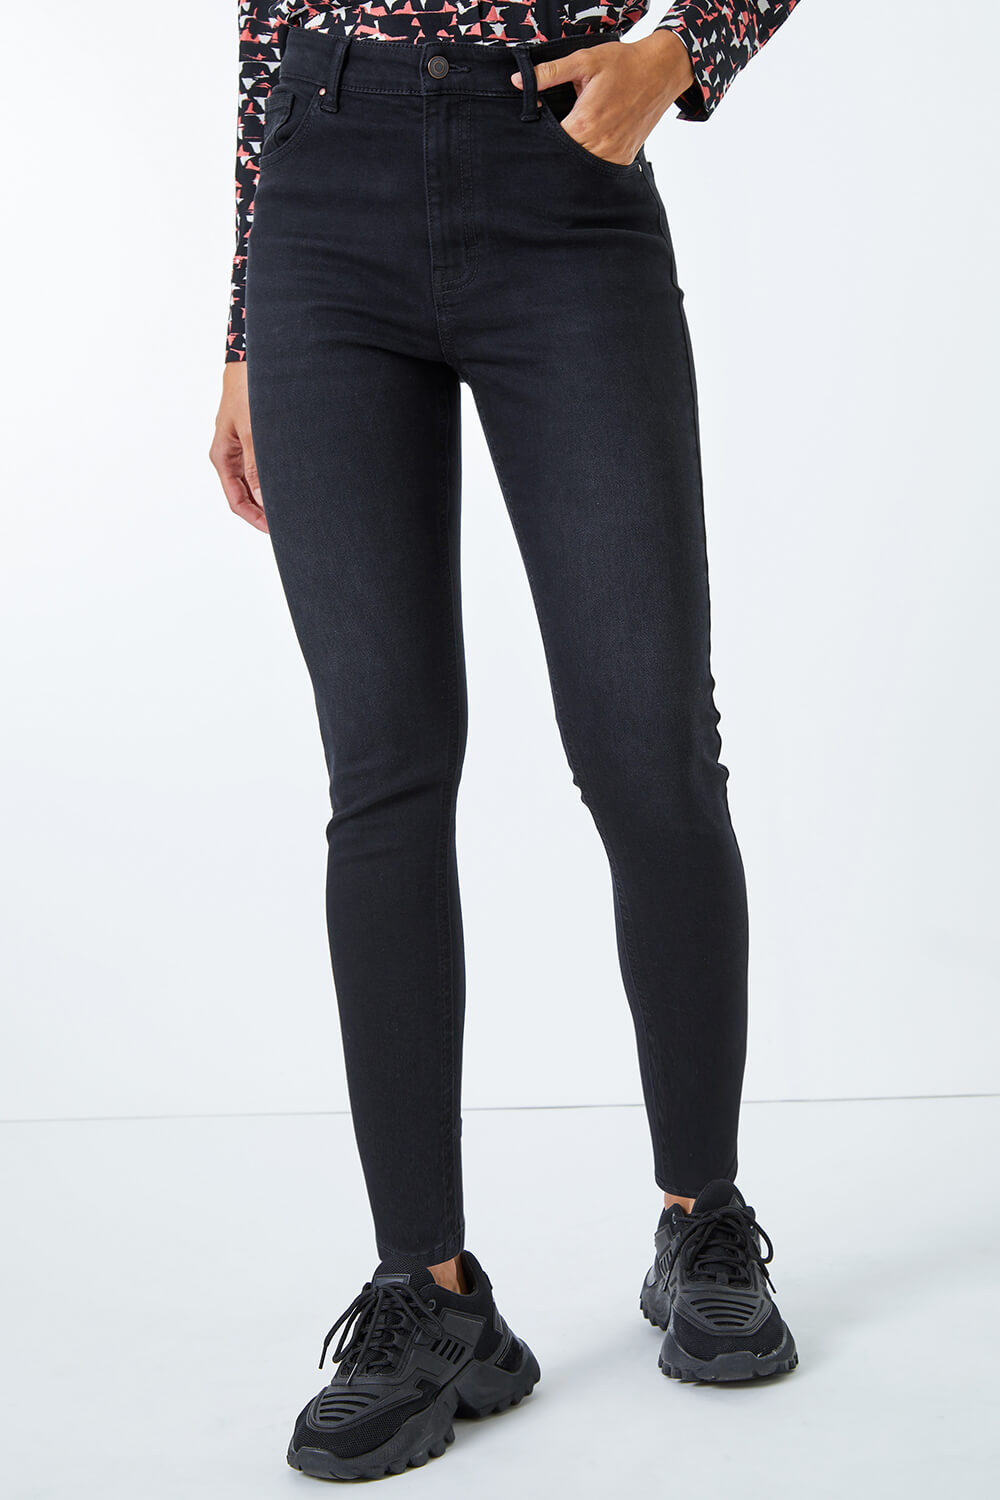 Black Super Skinny Stretch Jeans , Image 4 of 4